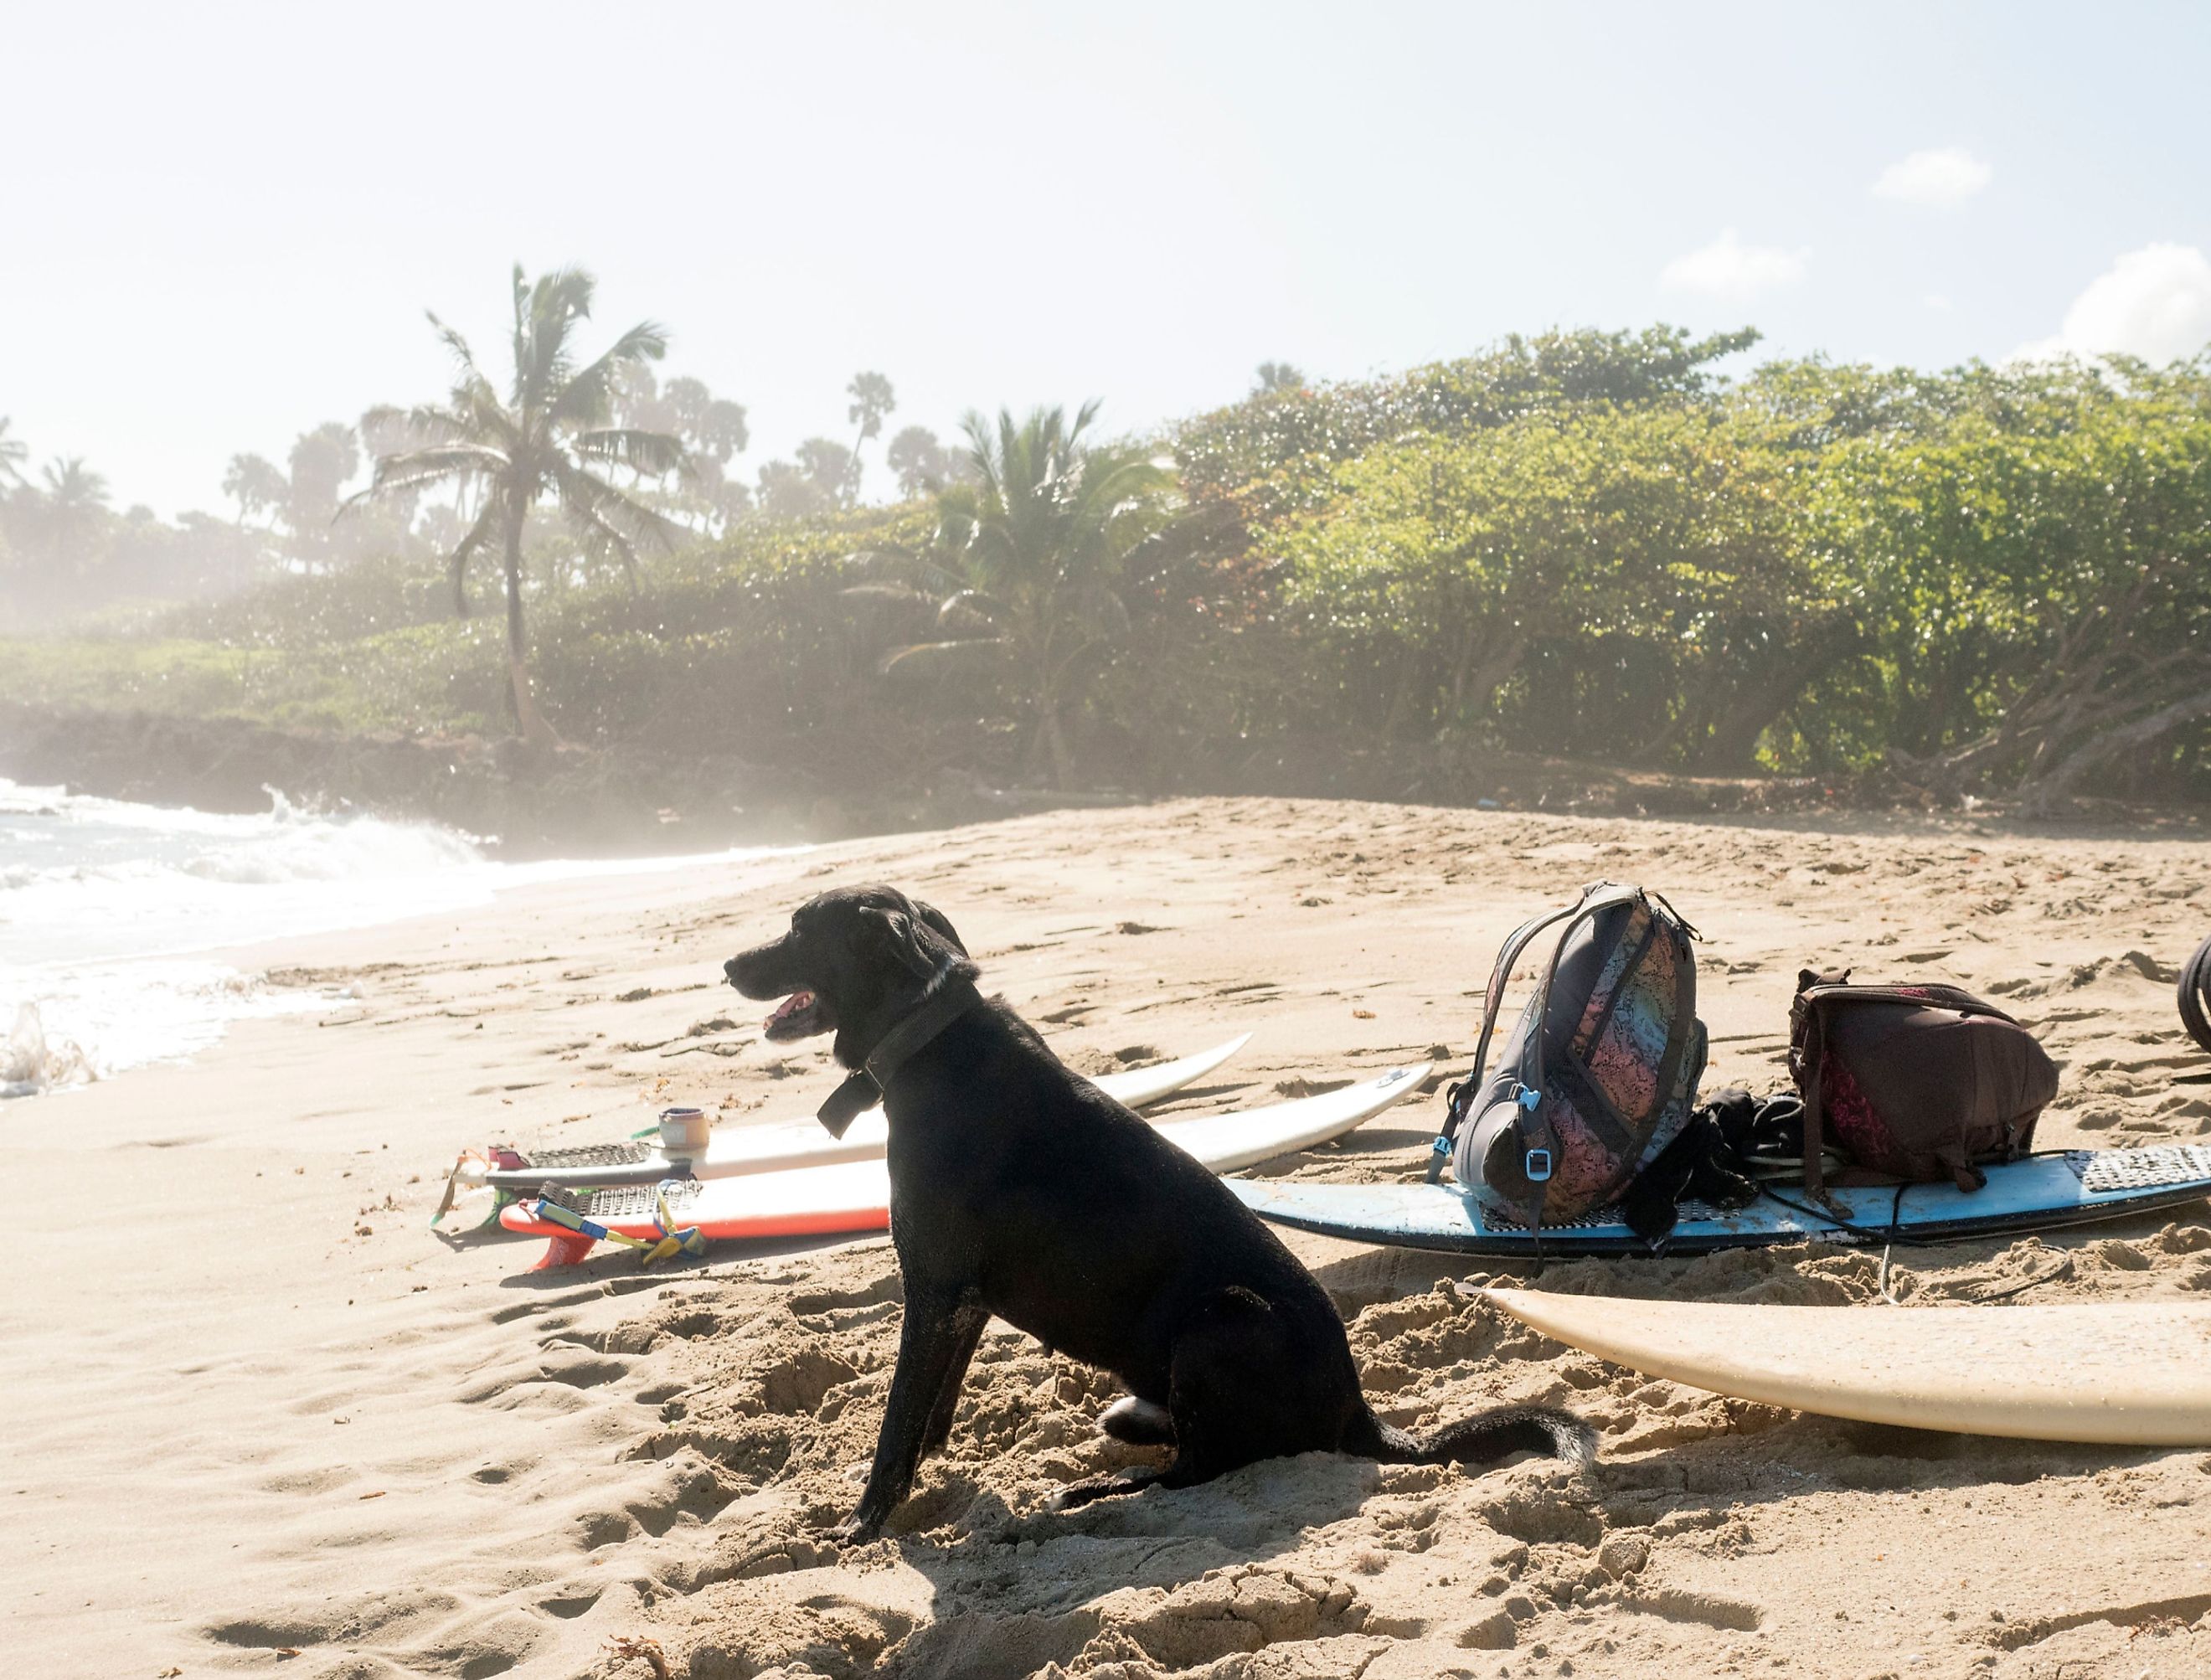 Surfboards, ocean, beach, dog. Image credit Balifilm via shutterstock